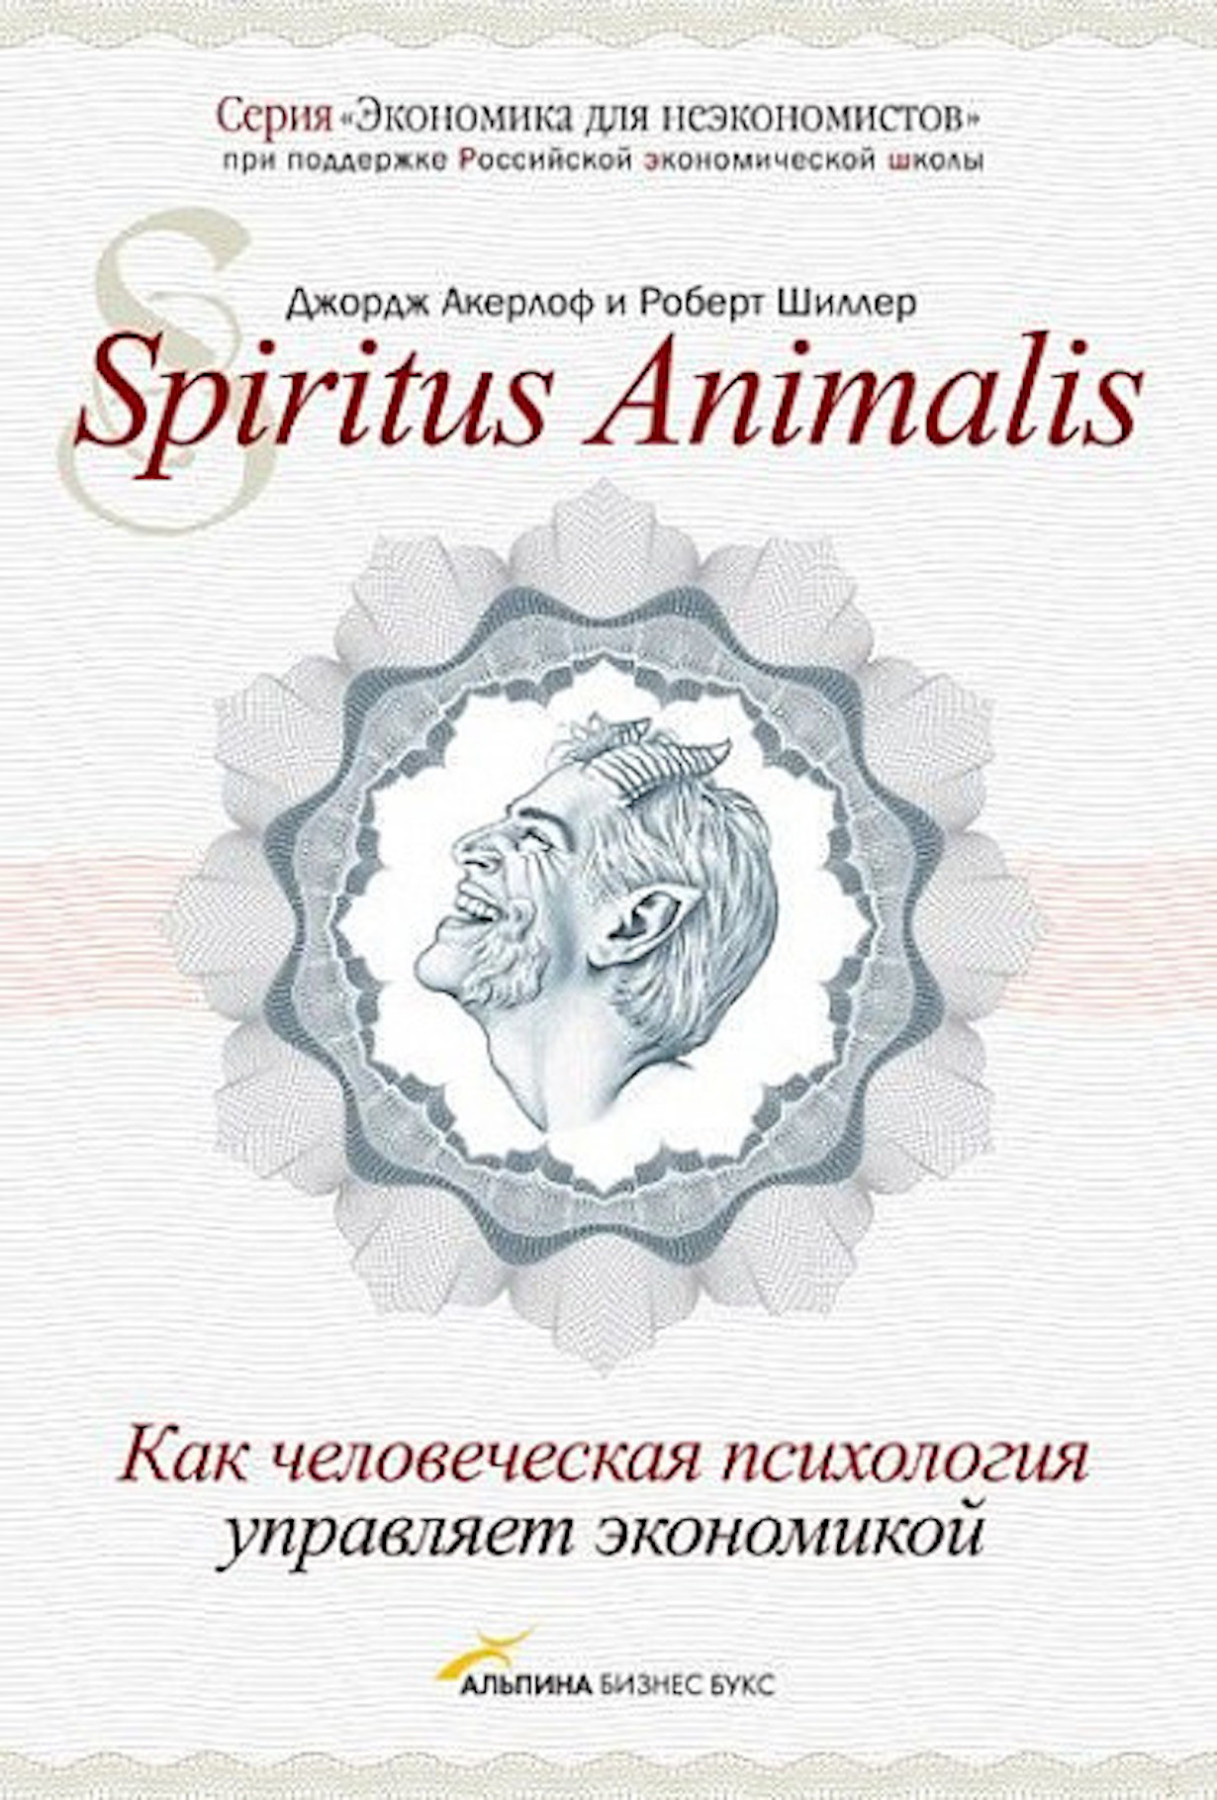 Spiritus Animalis обложка.